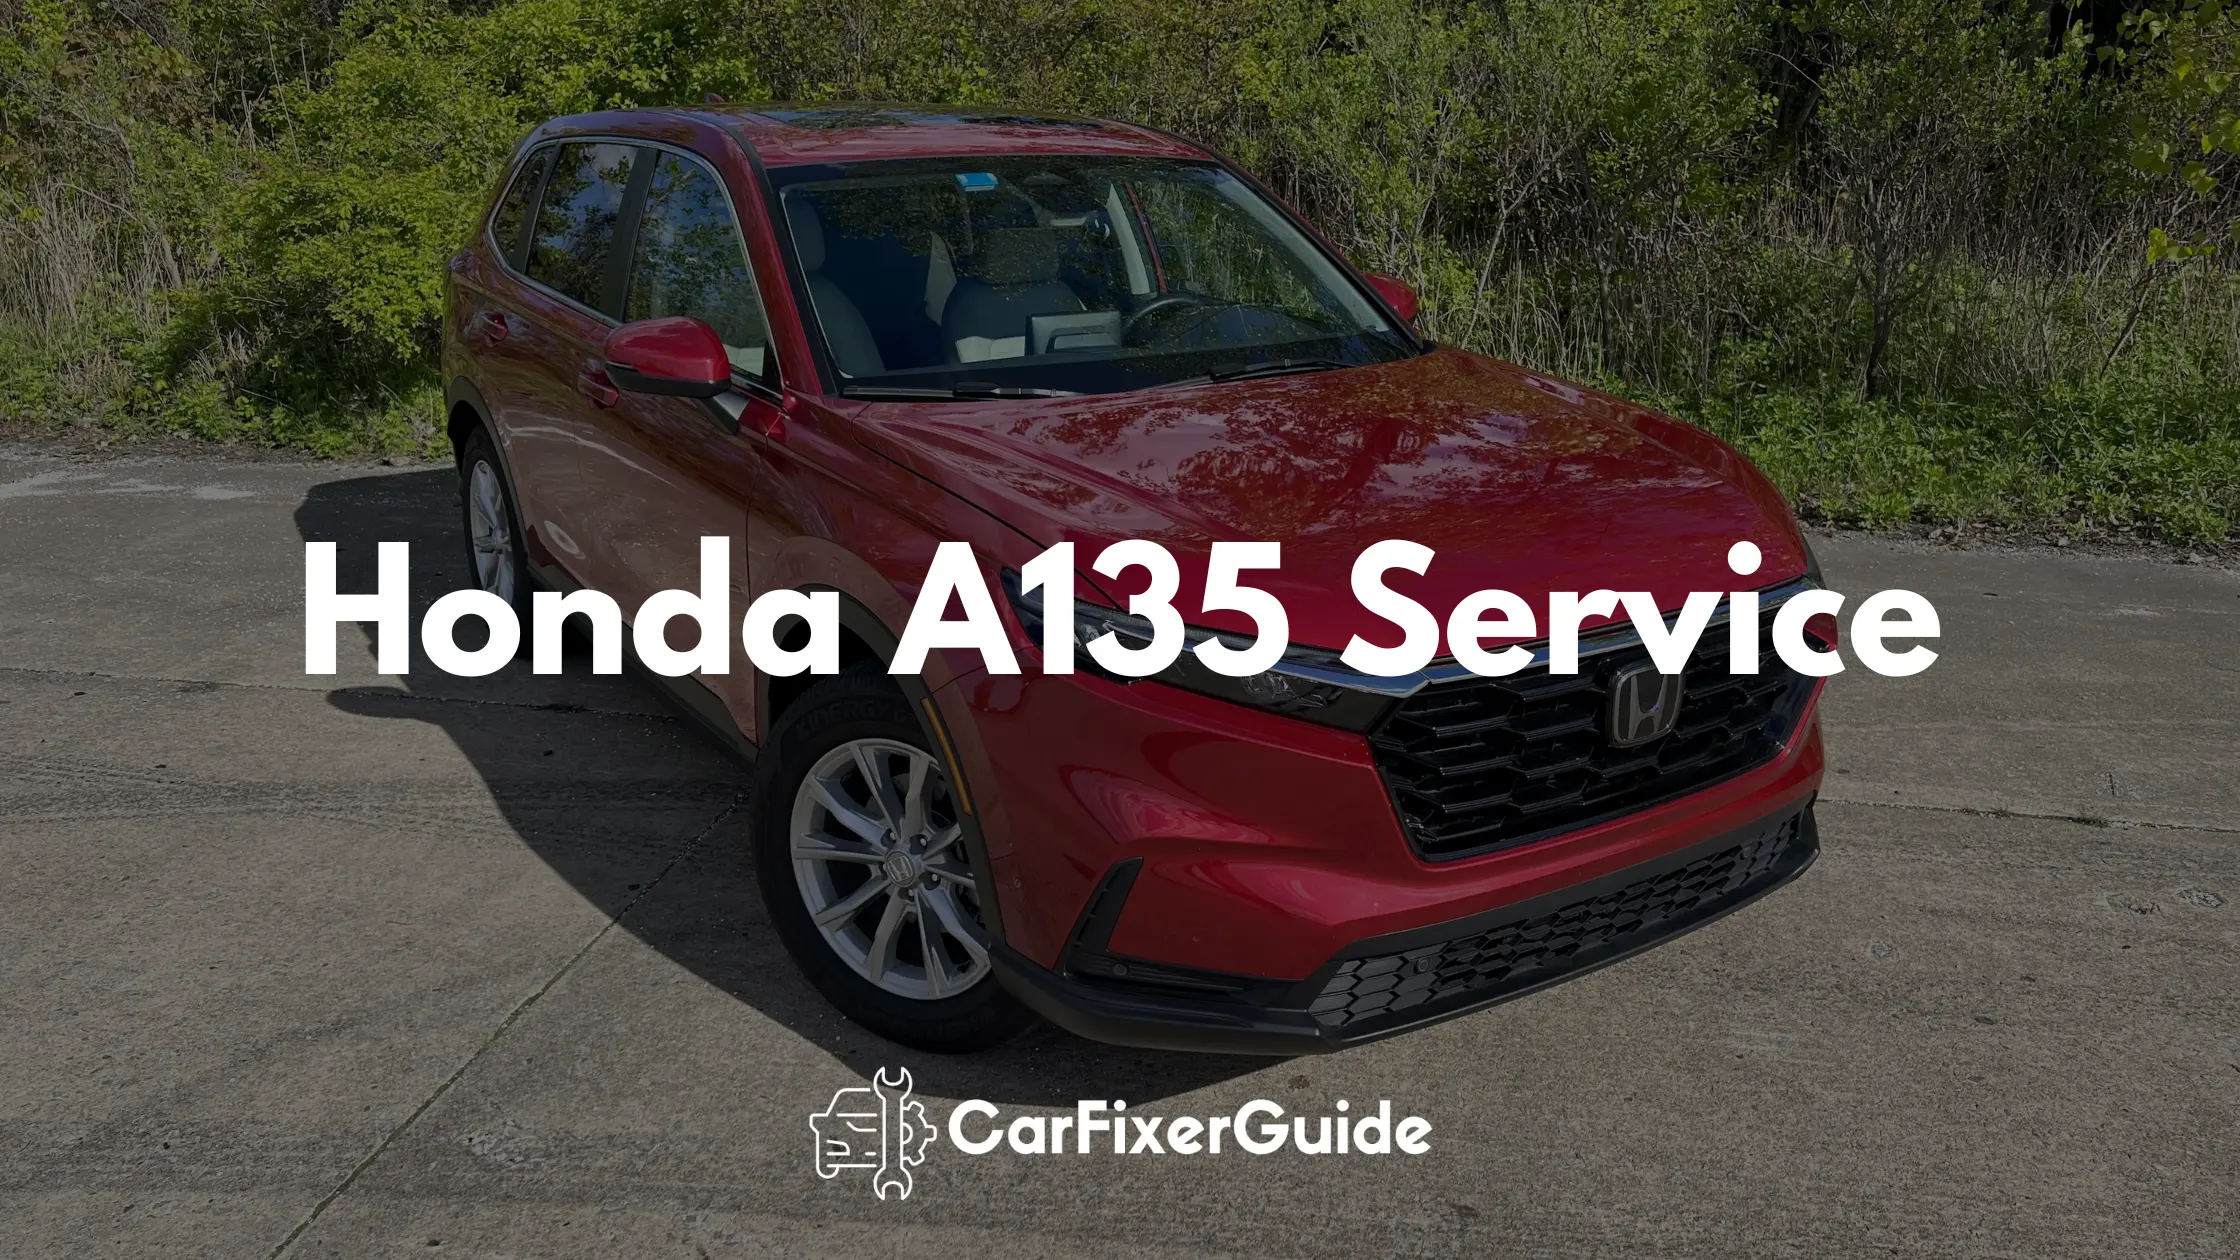 Honda A135 Service